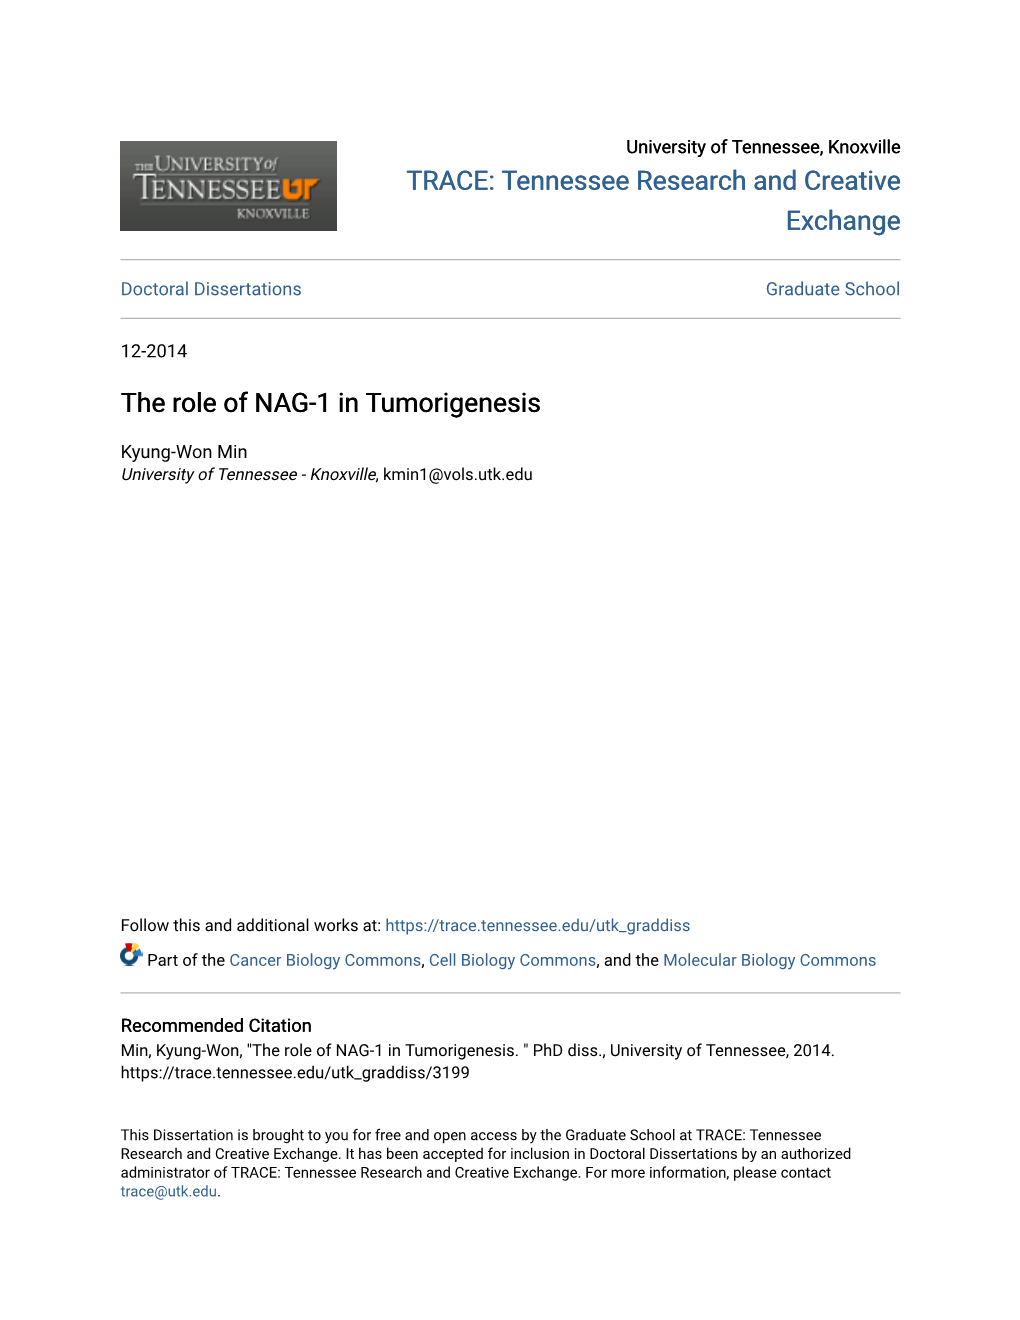 The Role of NAG-1 in Tumorigenesis